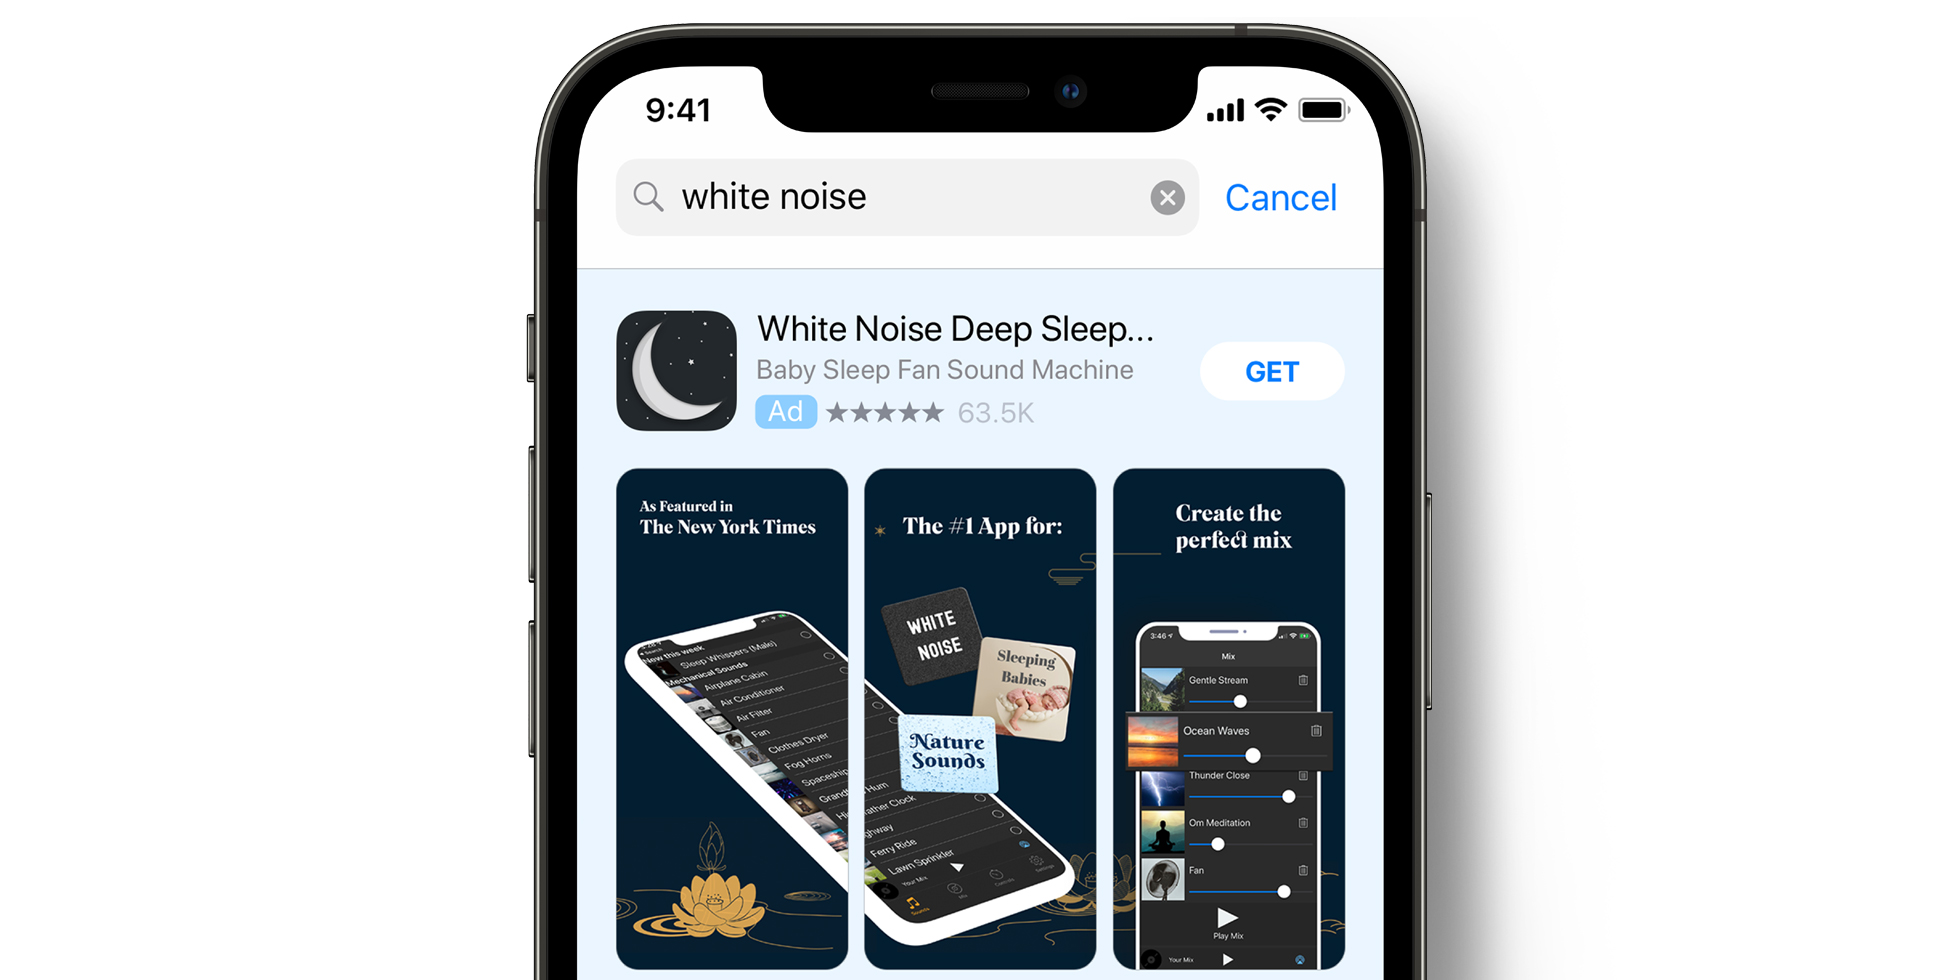 App Store 上的 White Noise 广告